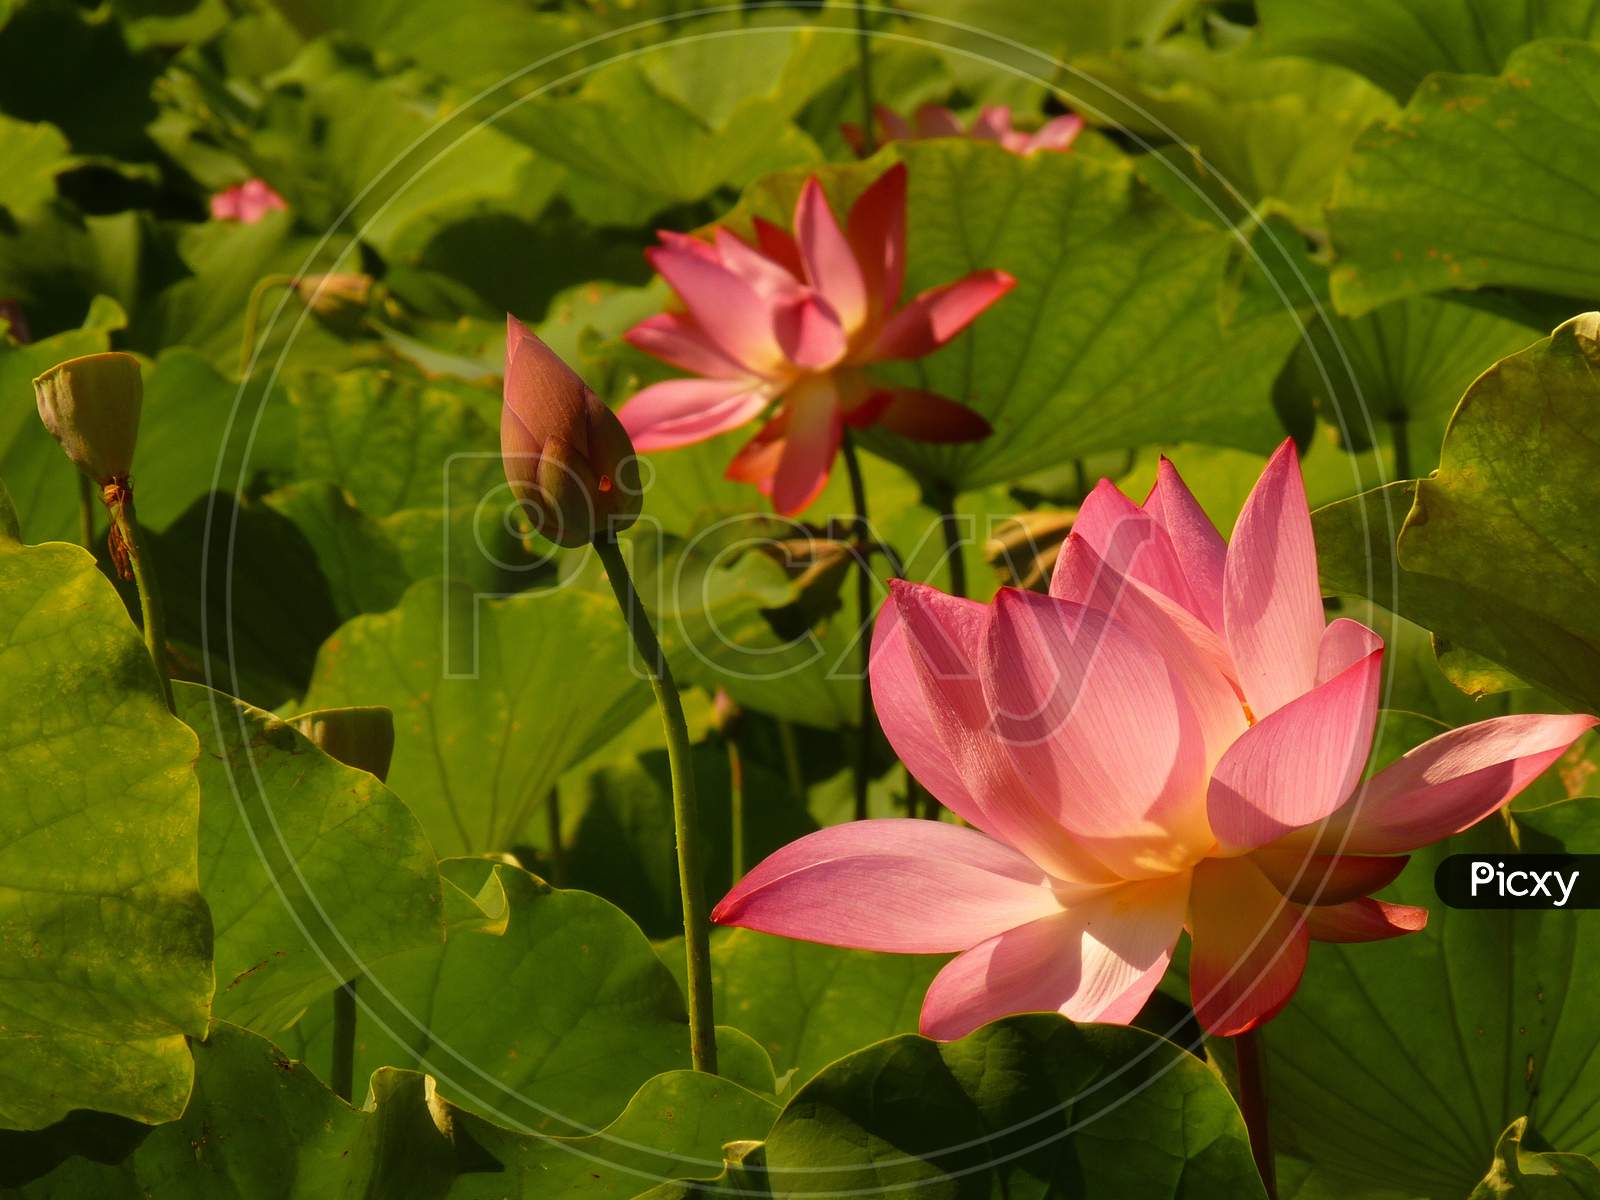 Lotus is blooming in the summer